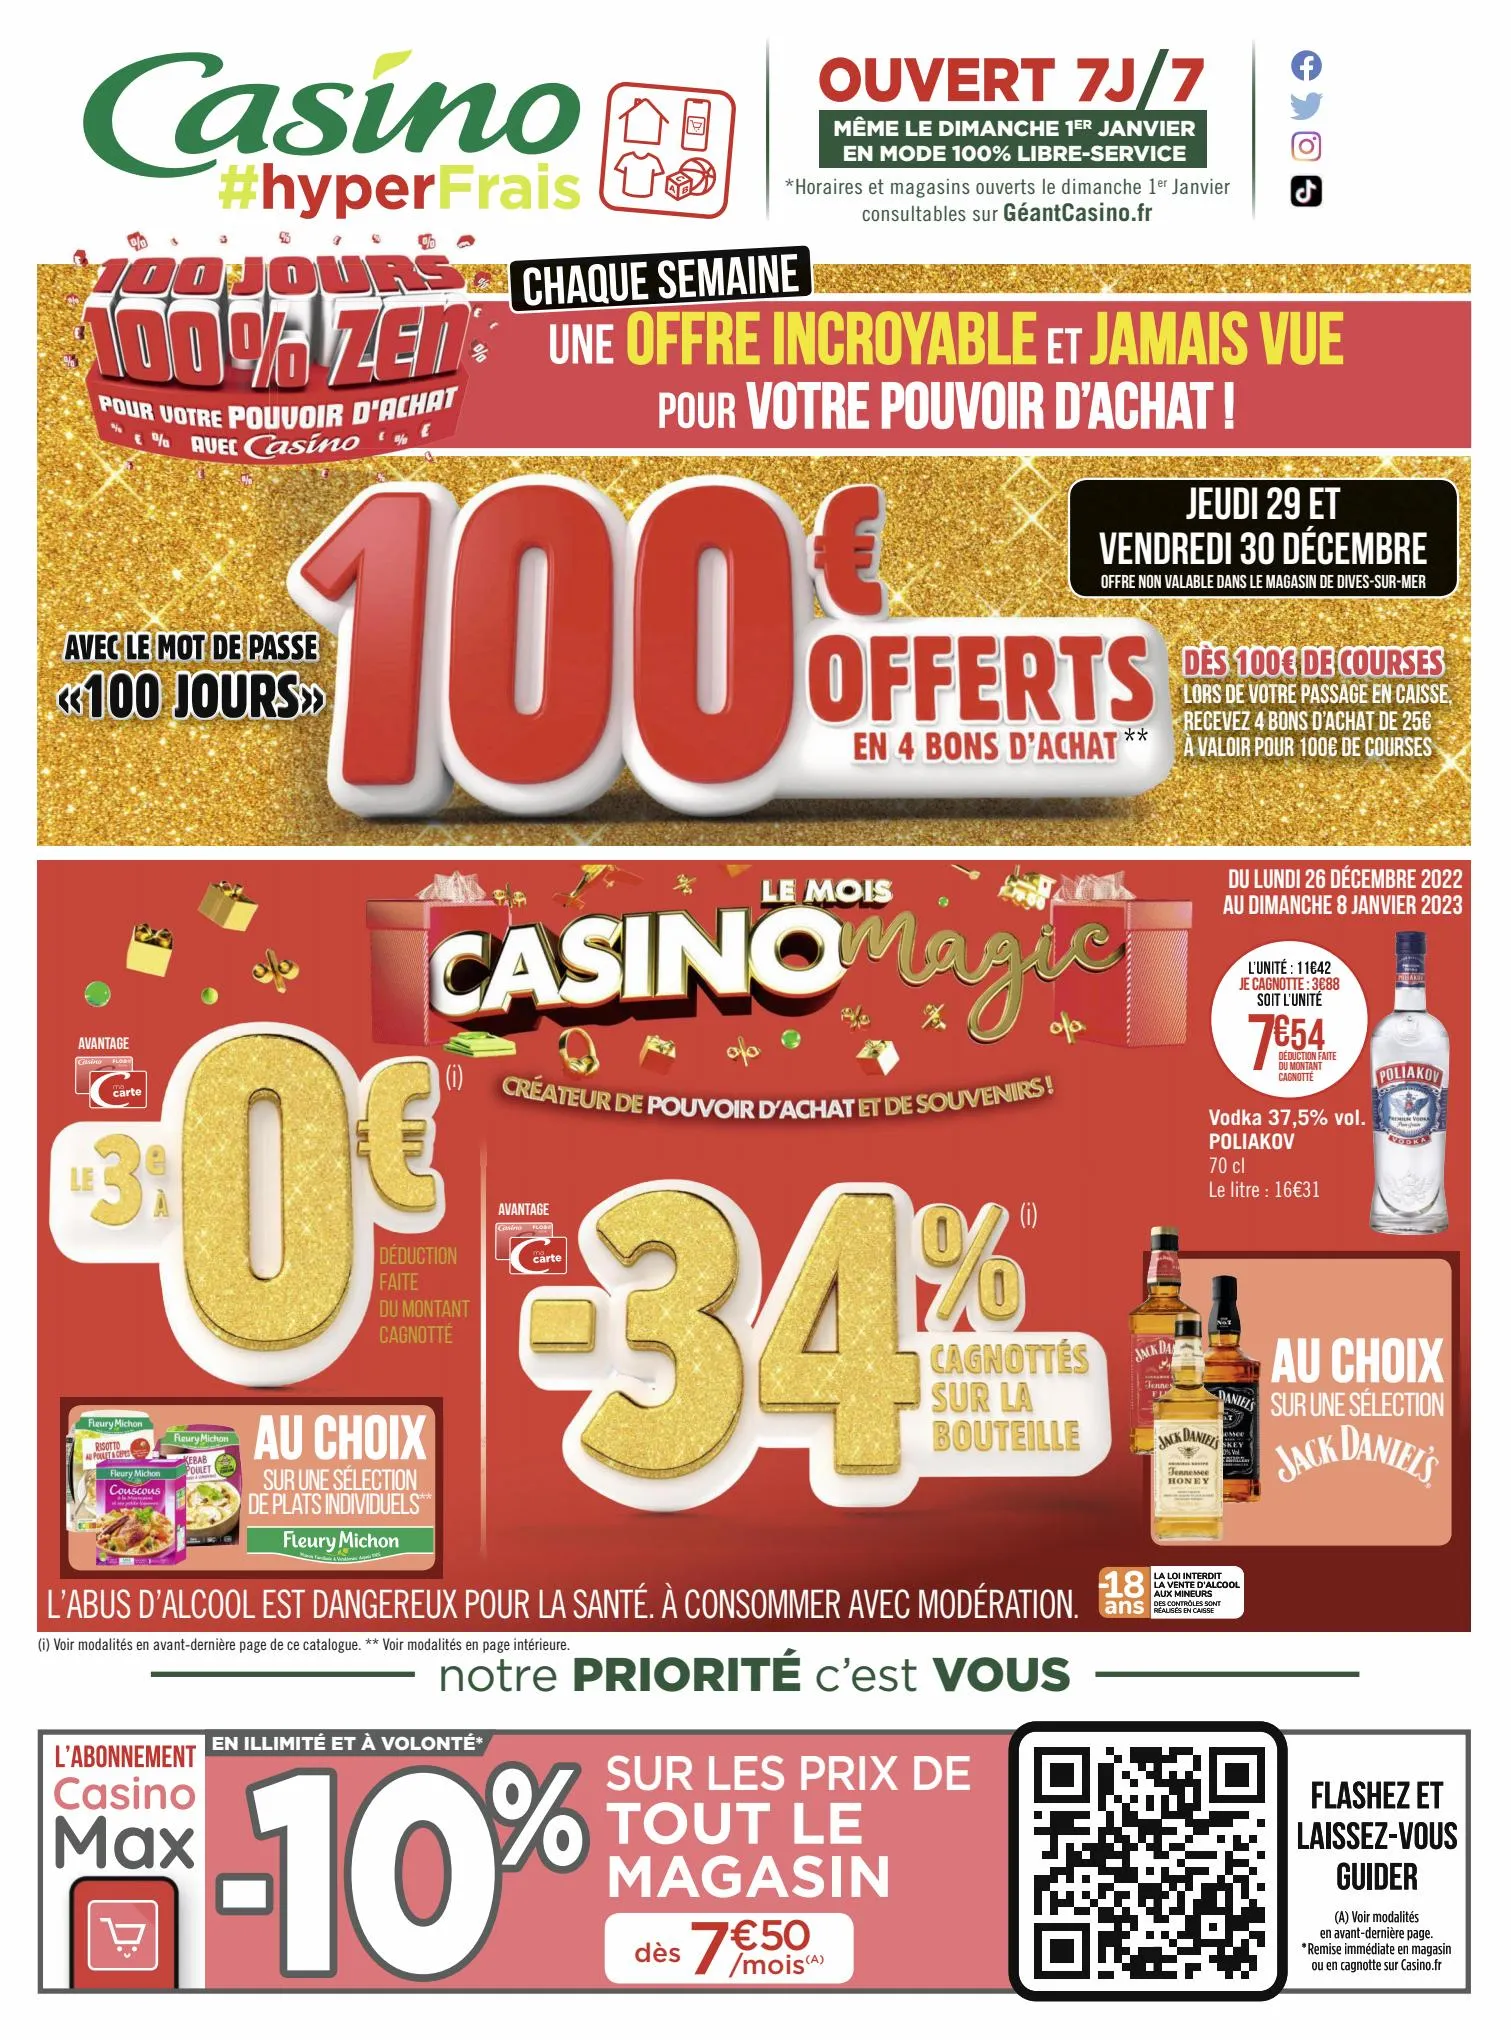 Catalogue Le mois Casino Magic, page 00001